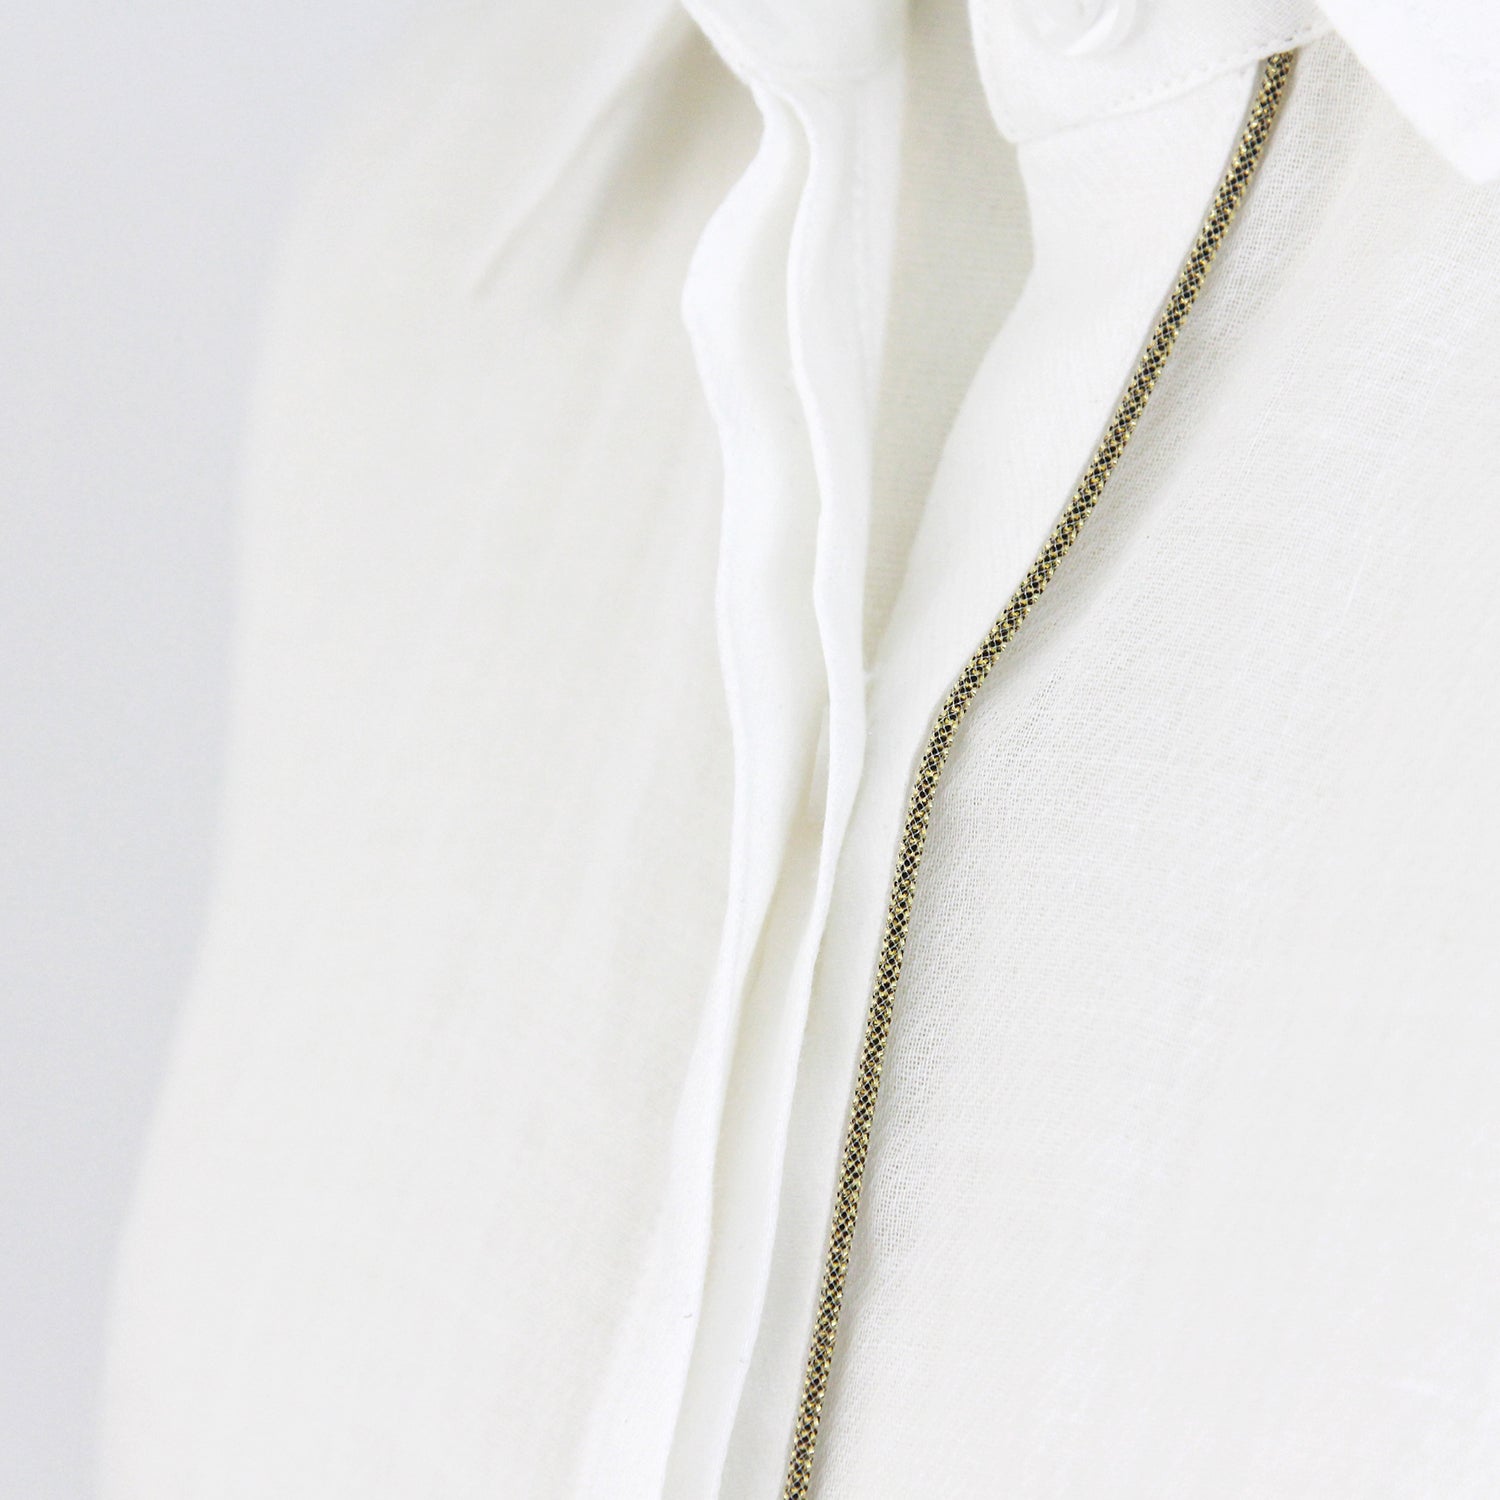 JODIE White Linenshirt by Gosia Orlowska - Stylish